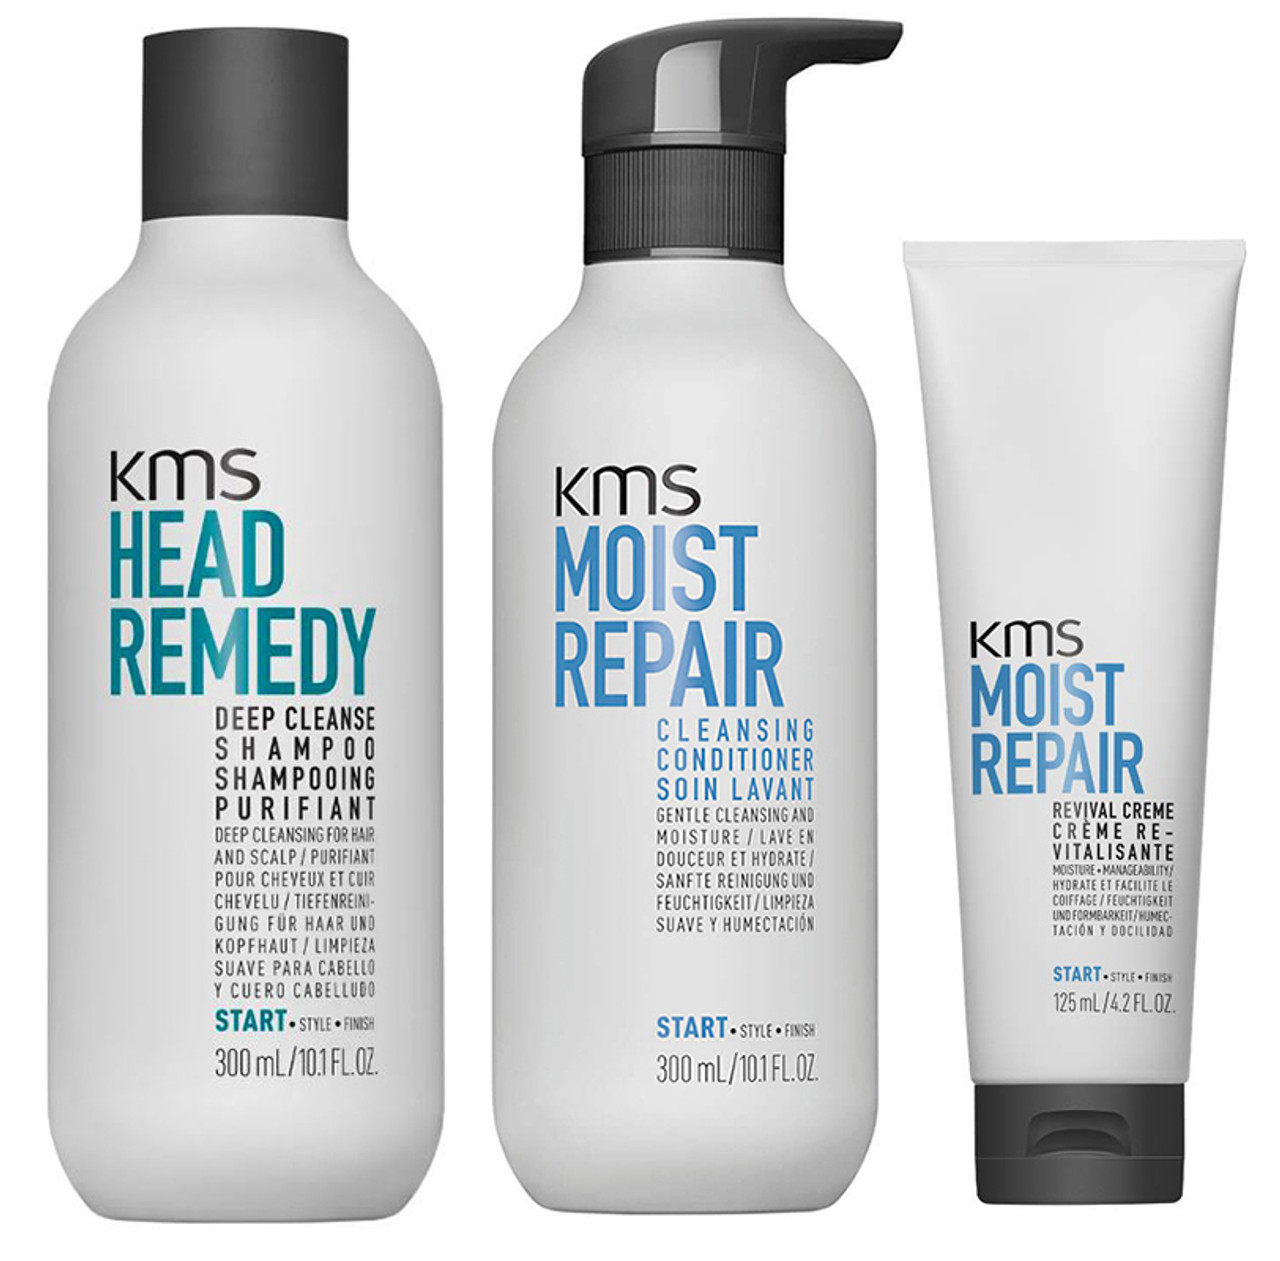 KMS Set - Deep Cleanse Shampoo & Moist Repair Cleansing & Revival Cream SleekShop.com